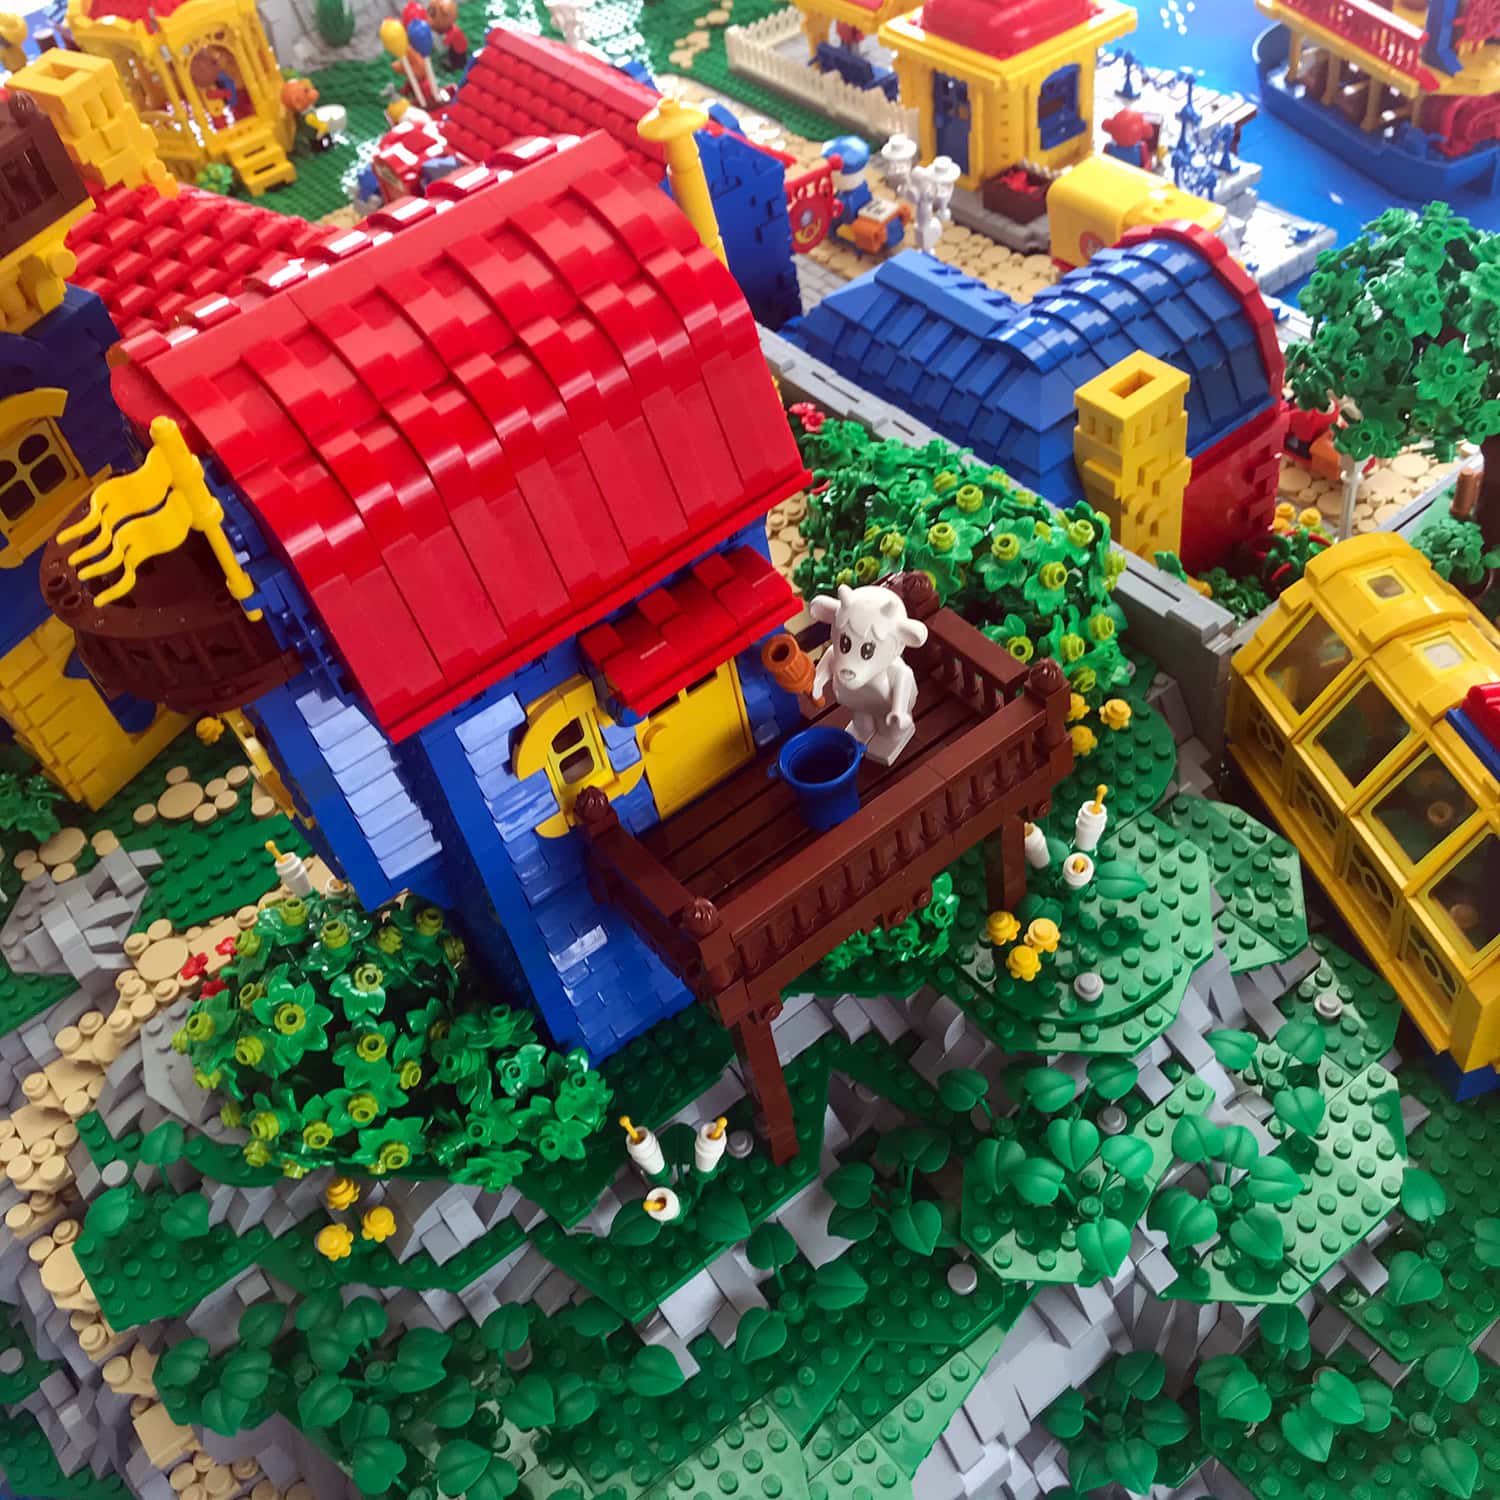 LEGO MOC Mosaic - Stone Island LOGO - LEGO Art by Firemodels